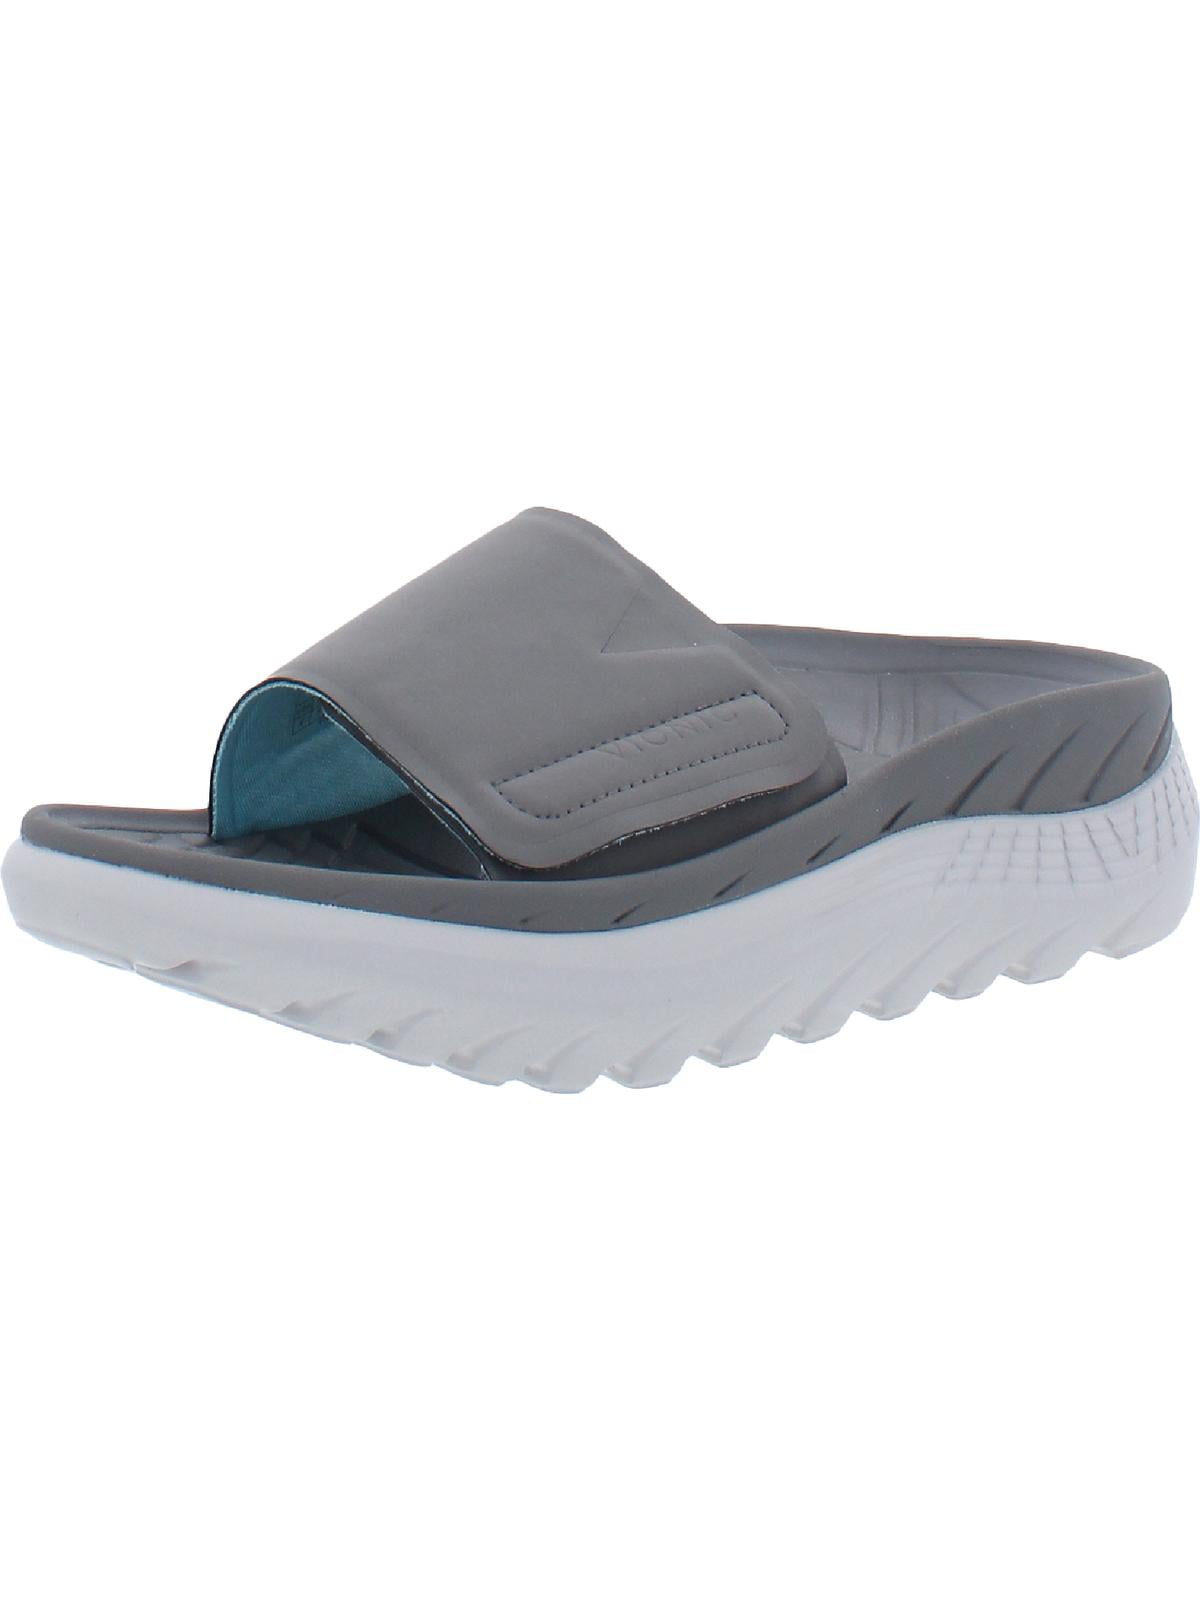 Womens Slip On Comfort Slide Sandals - Walmart.com